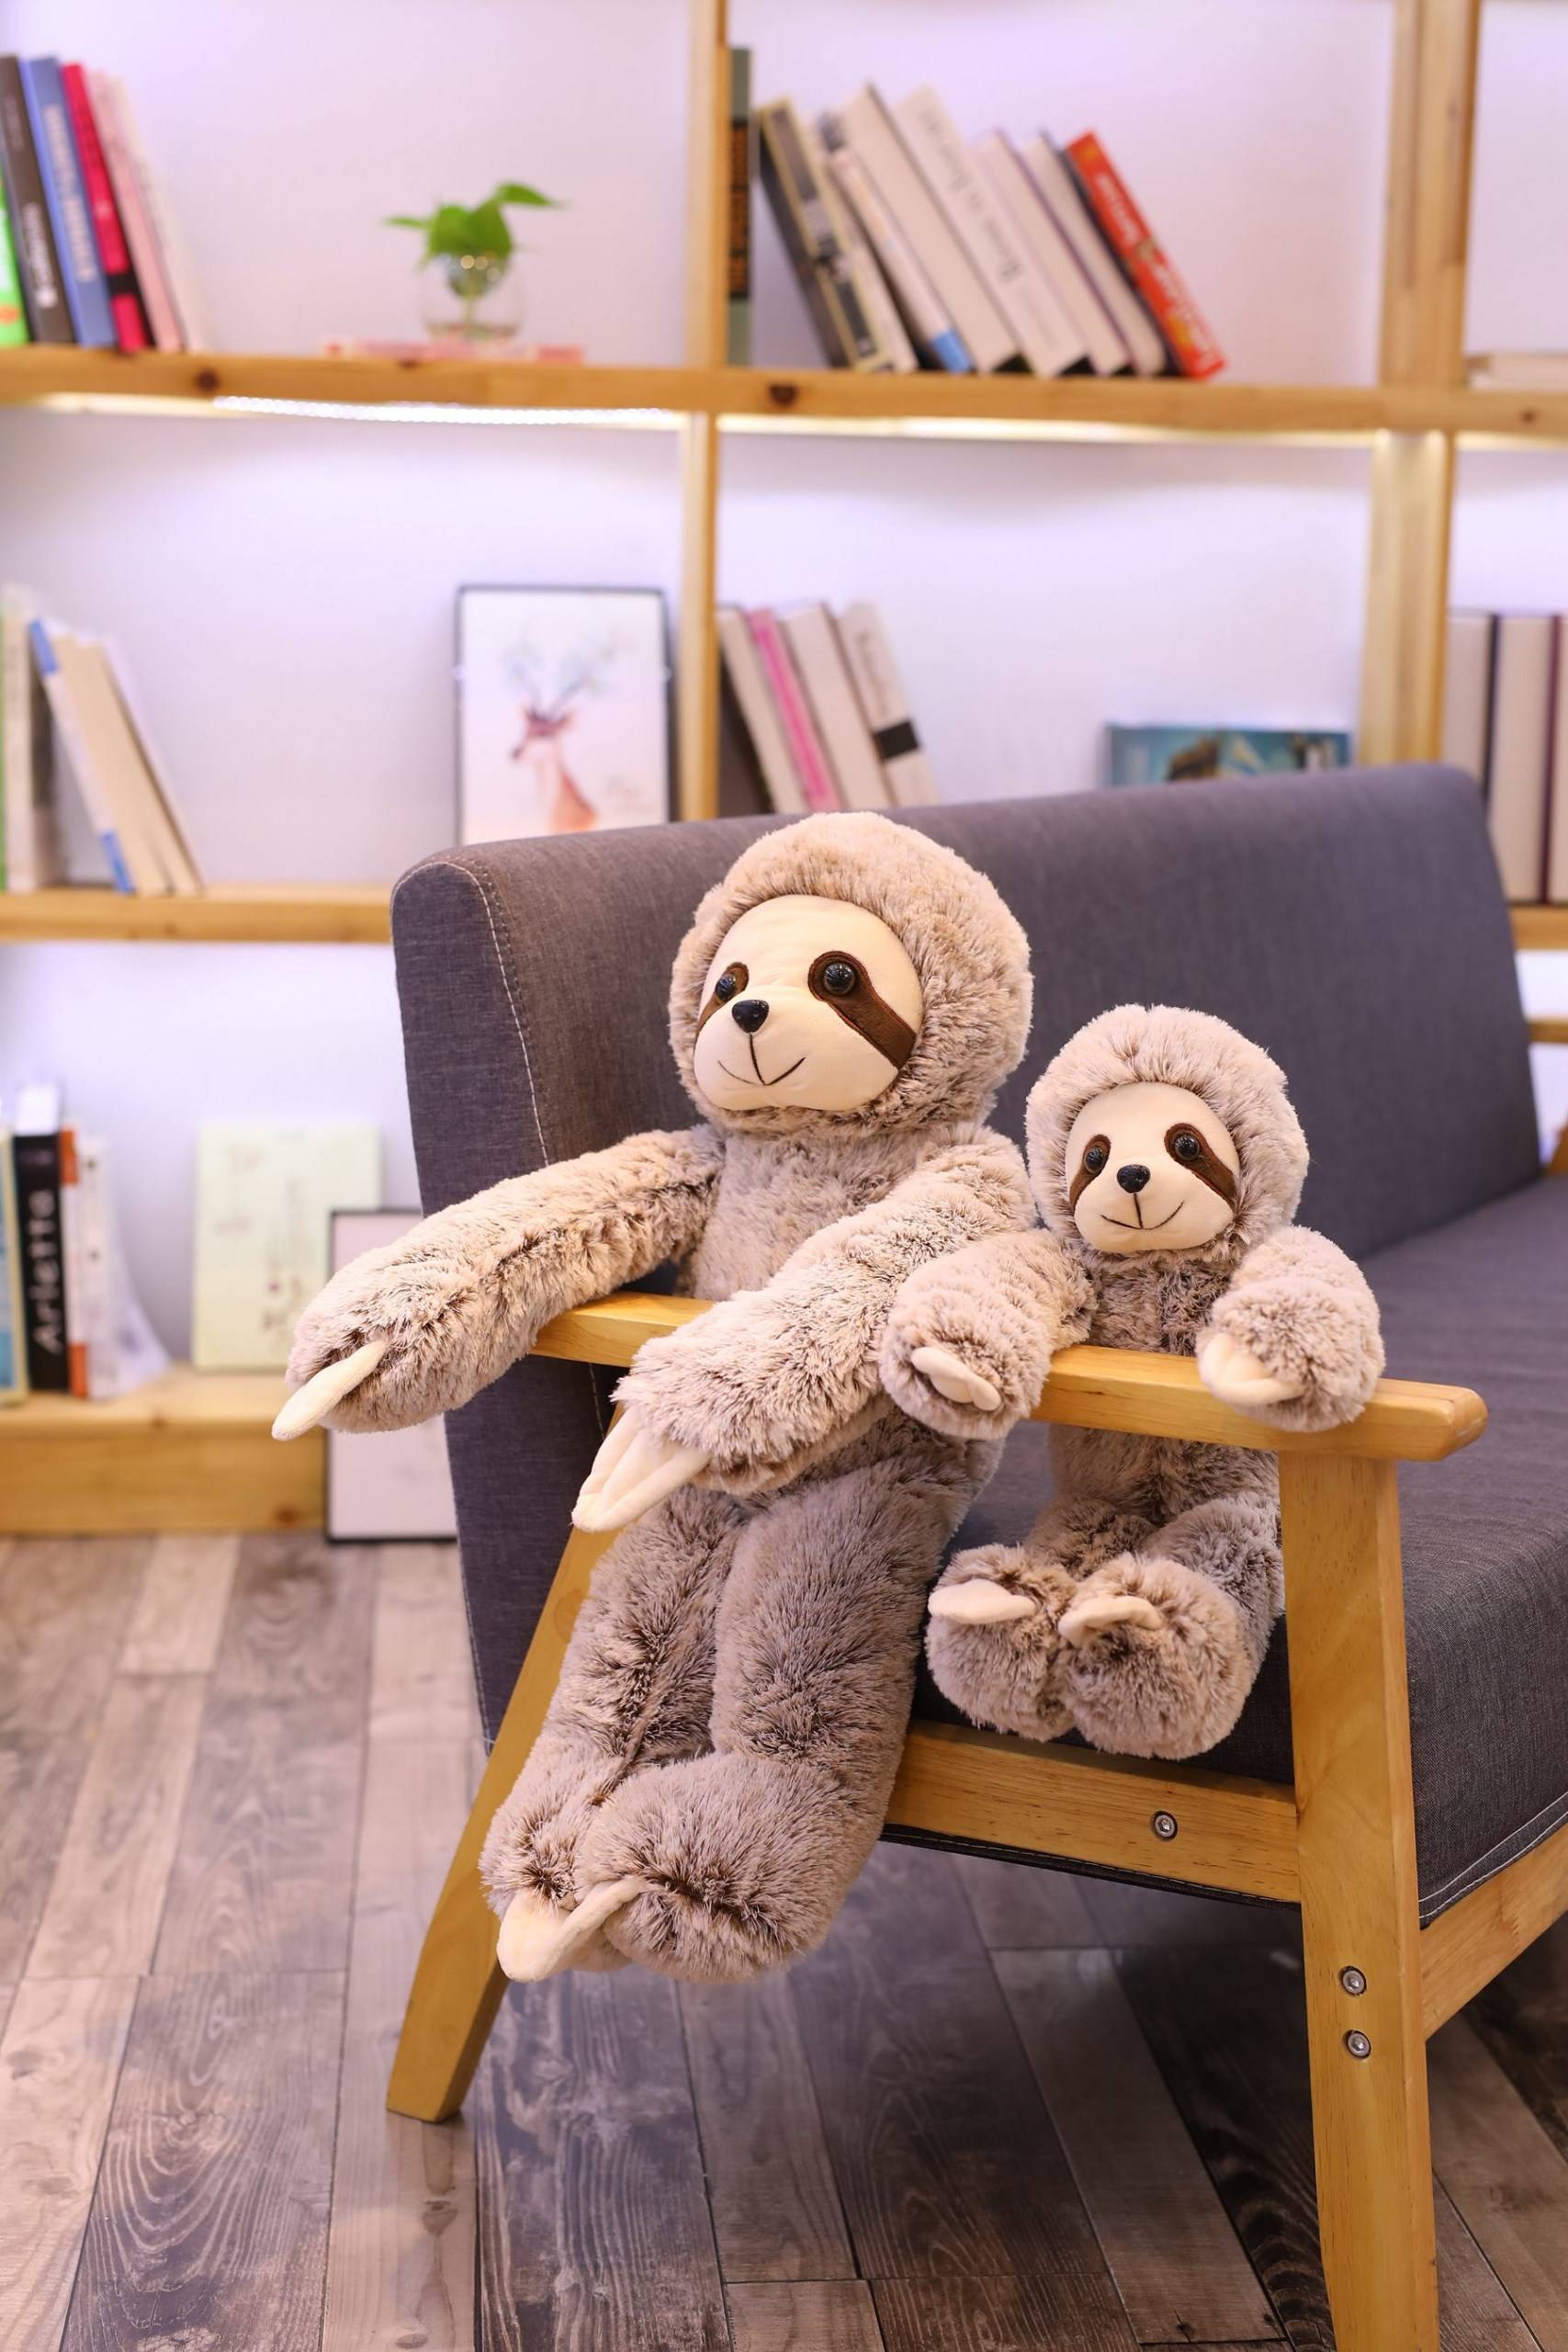 Popular Plush Toy Creative Animal Plush Doll Sloth Best Toys For Baby Kids Birthday Gift